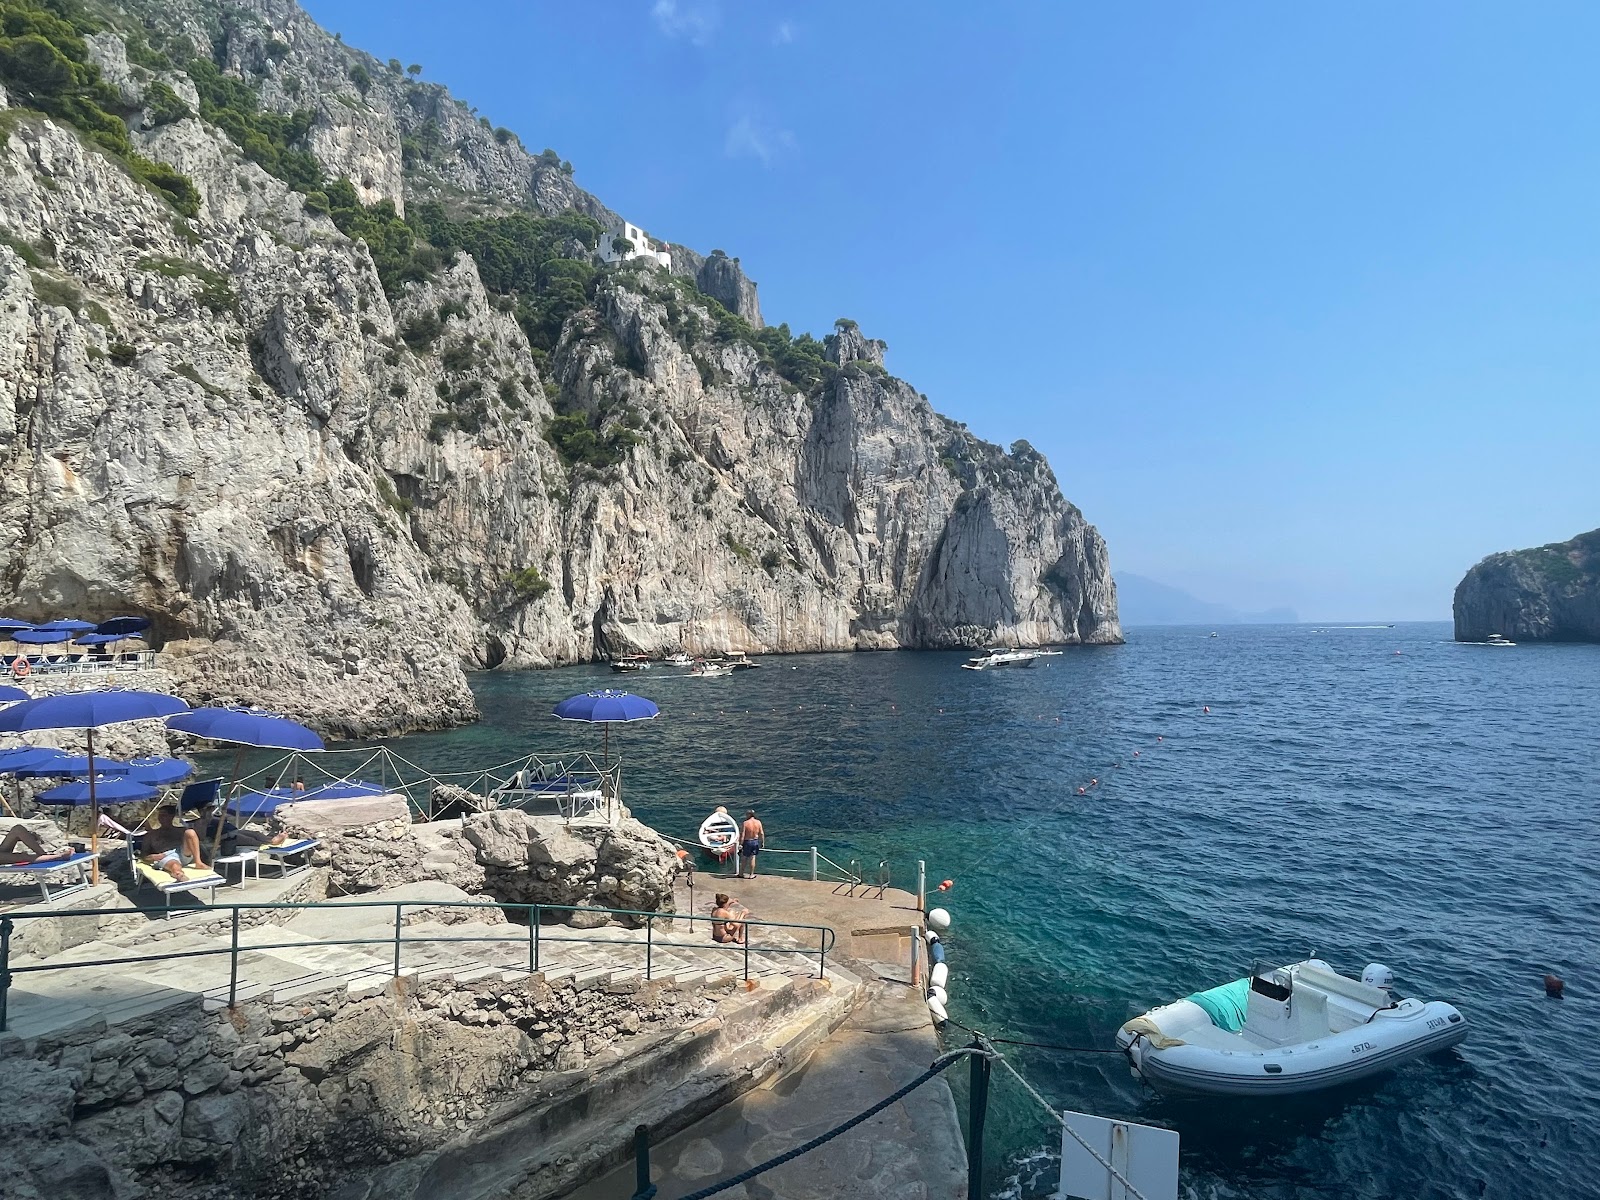 Foto av Spiaggia Da Luigi Ai Faraglioni med hög nivå av renlighet